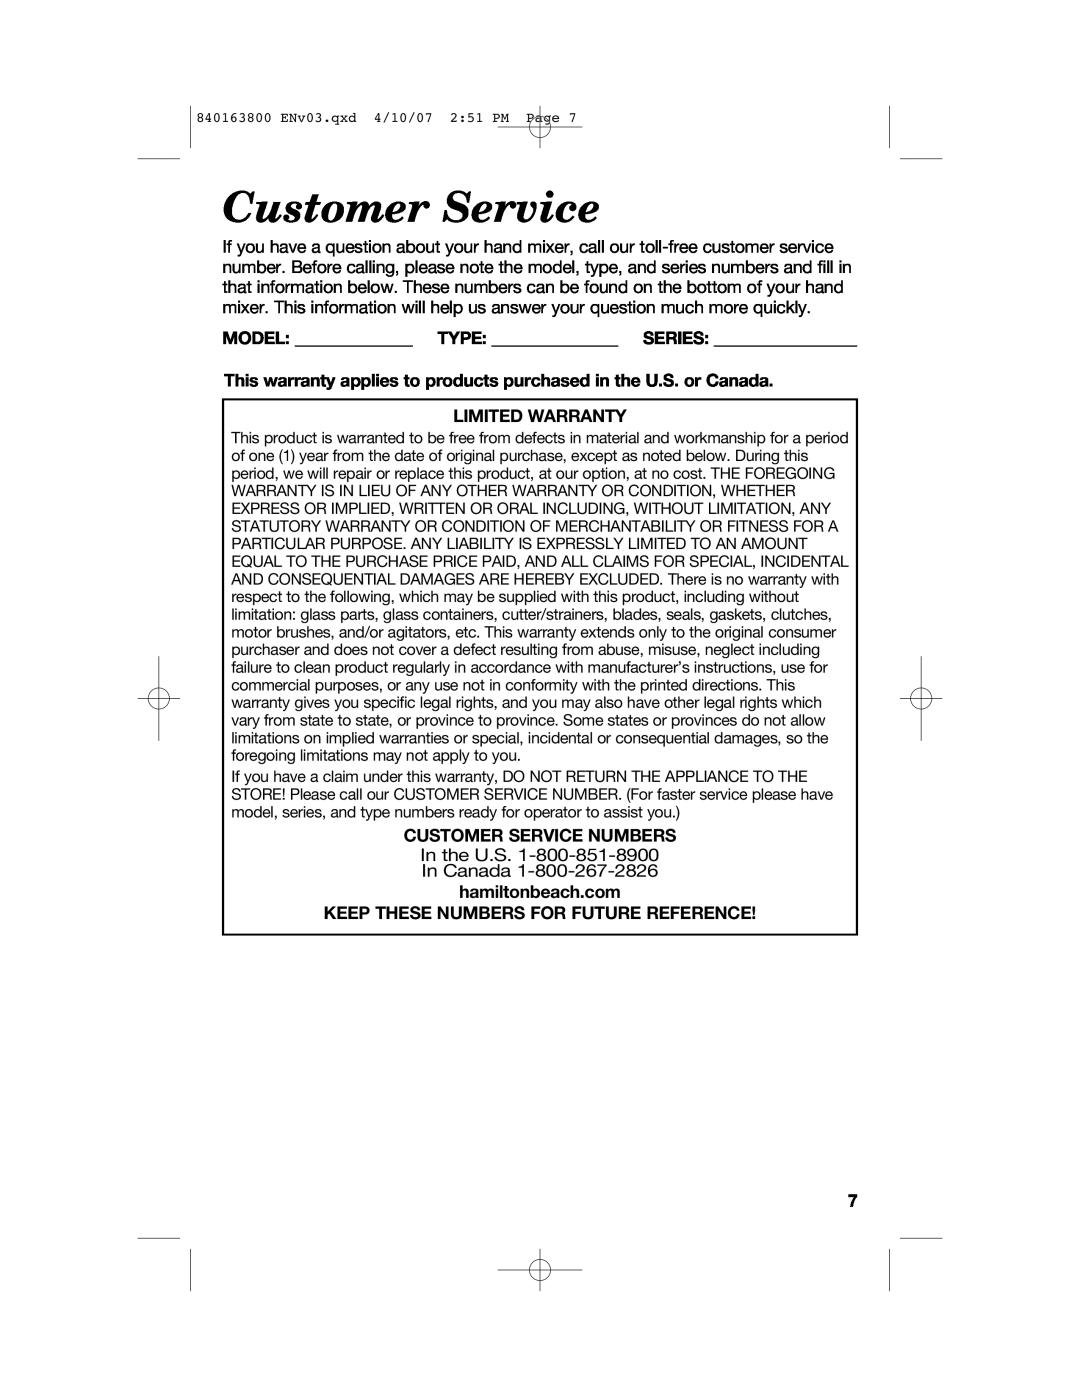 Hamilton Beach 62650, 840163800 manual Model Type Series, Limited Warranty, Customer Service Numbers 